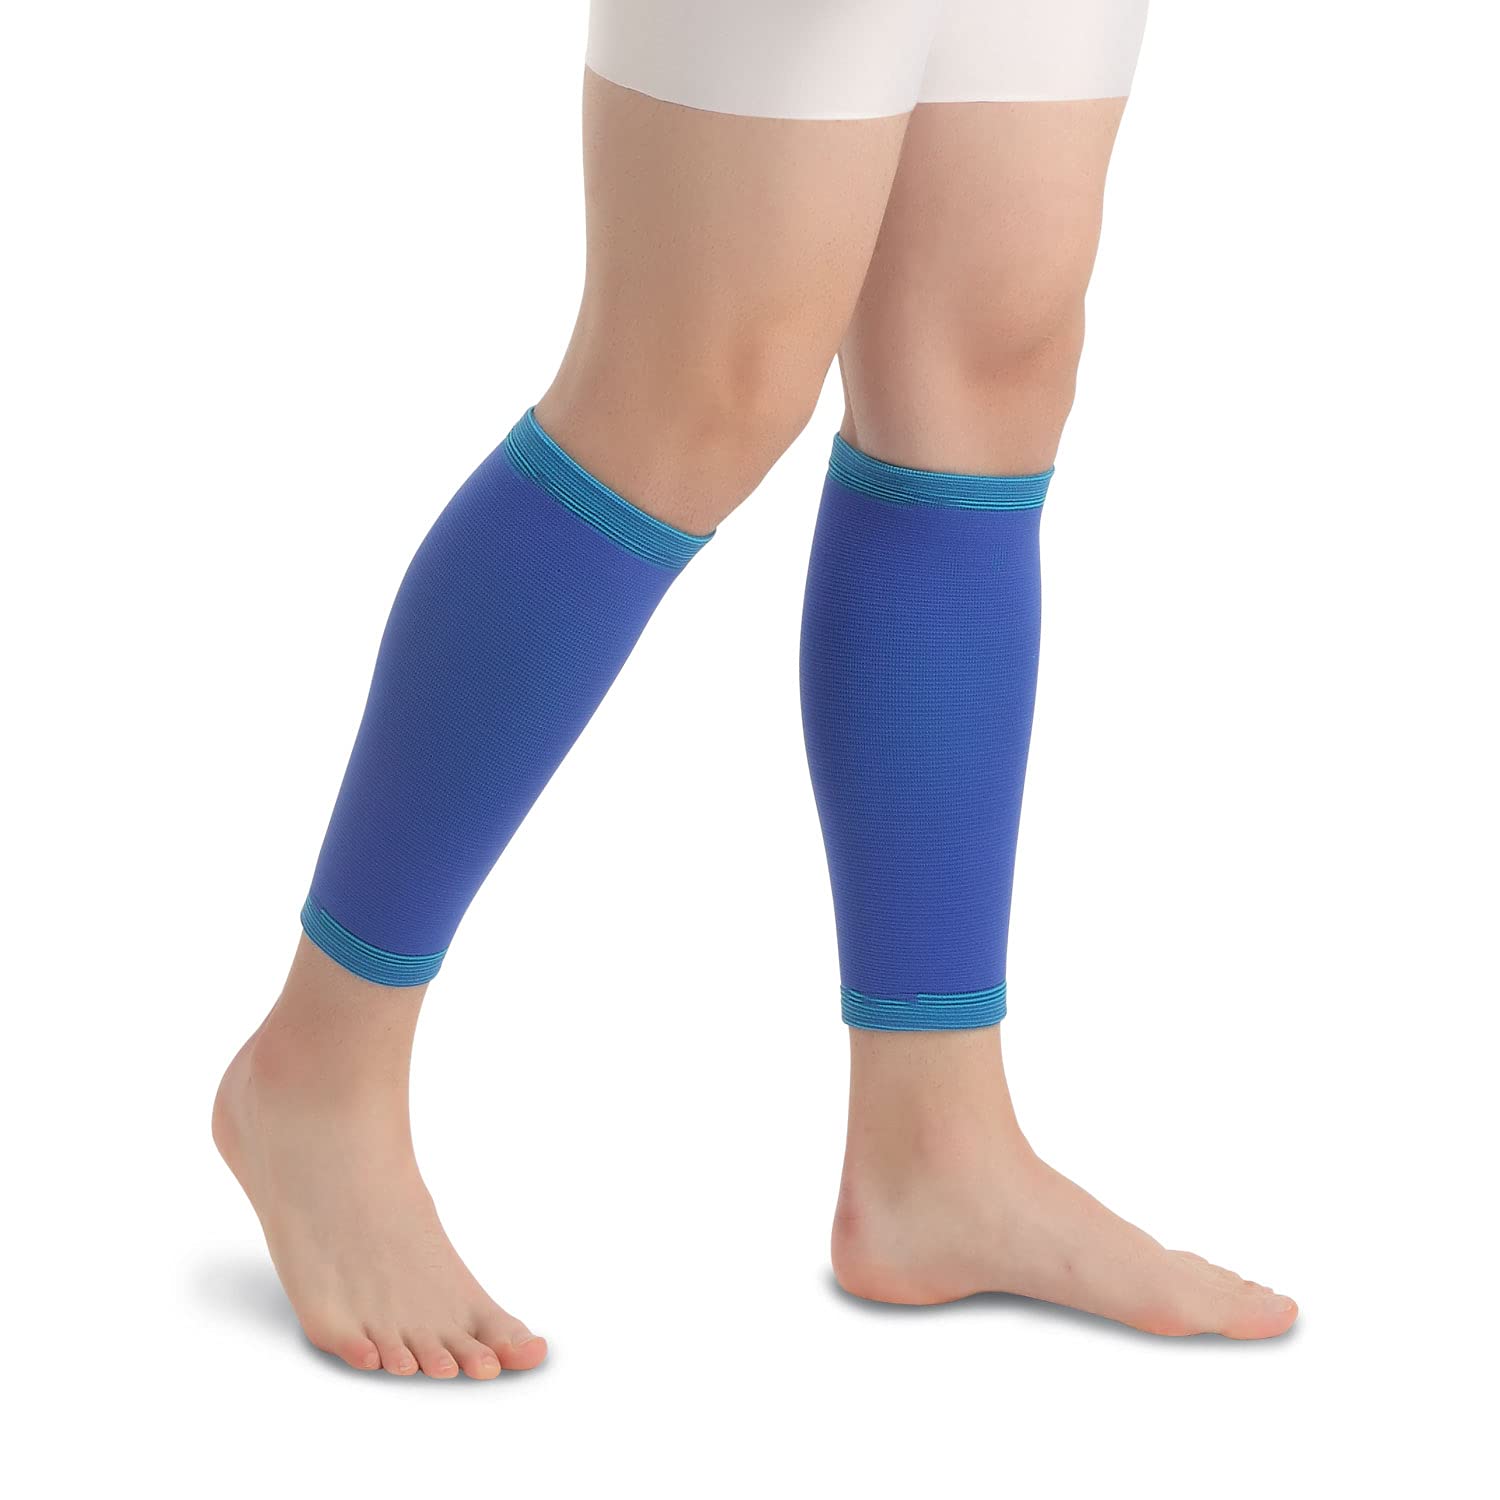 Flamingo Premium Calf Support Premium Leg Wrap Brace Compression Sleeve for  Women Shin Splint Support Running Straps Sports, Gym, Running, Arthritis, Joint Pain Relief for Men and Women